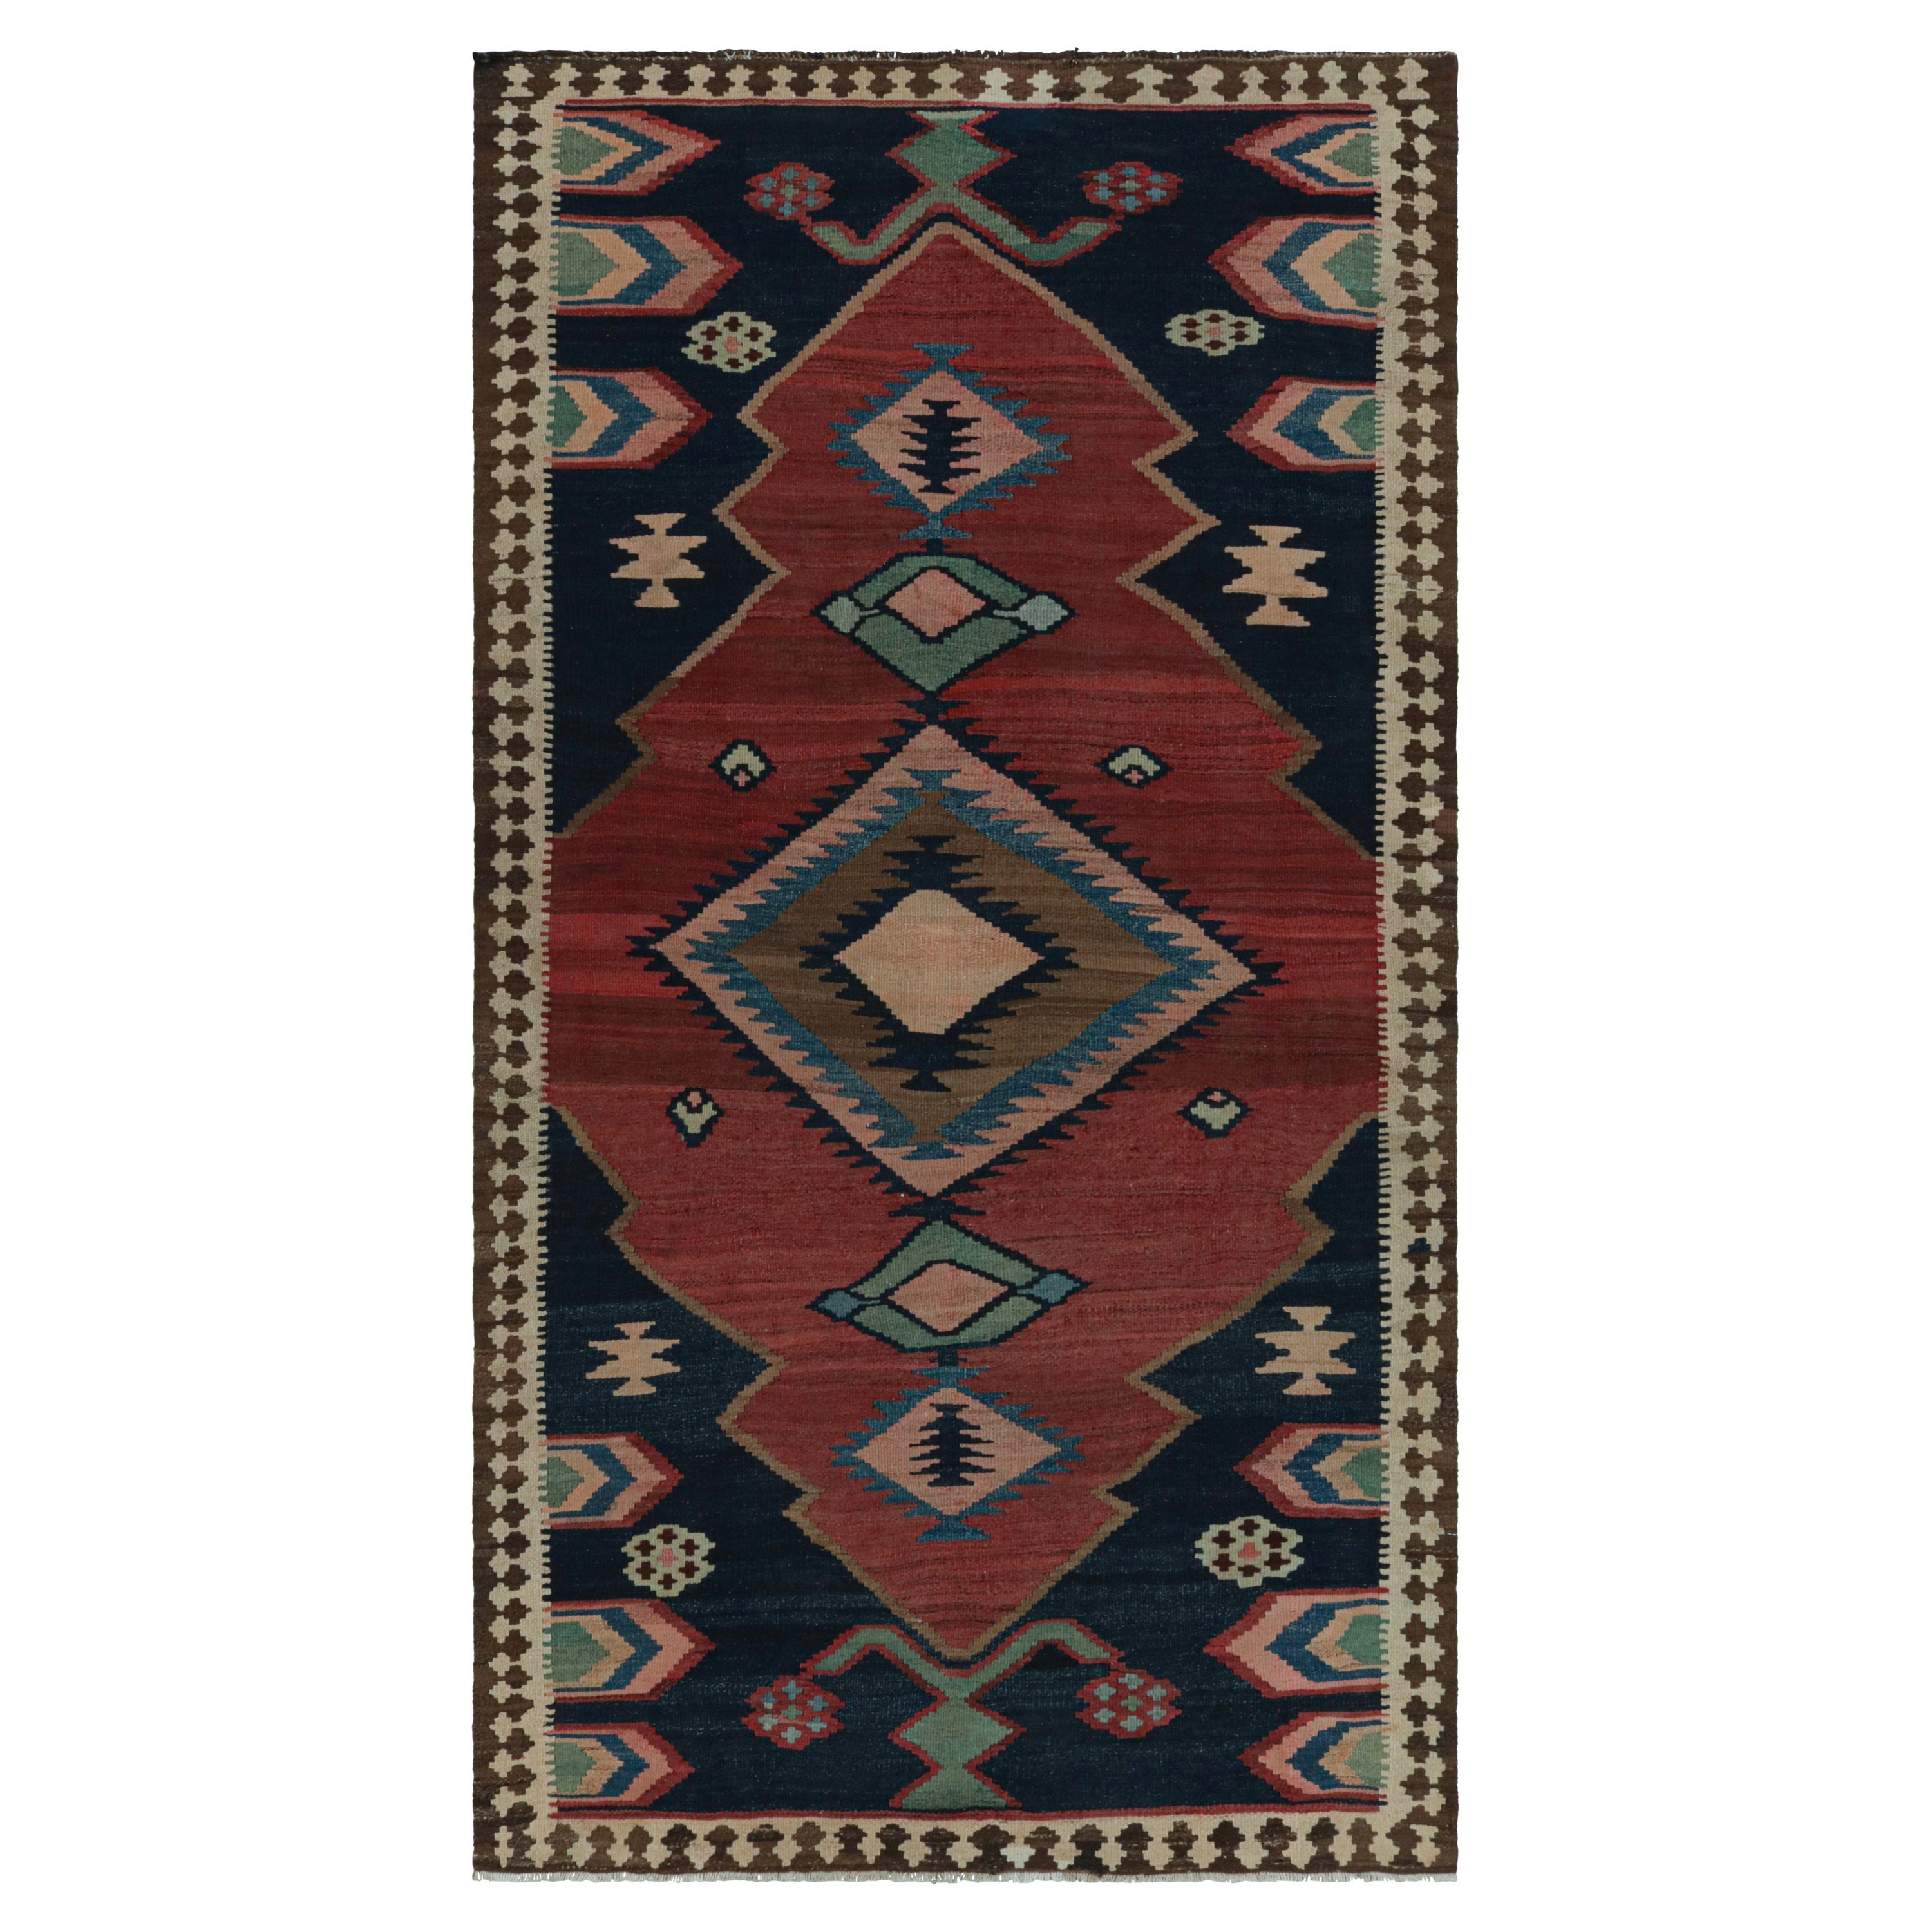 Vintage Afghani tribal Kilim rug, with Open Field and Medallion, Rug & Kilim For Sale